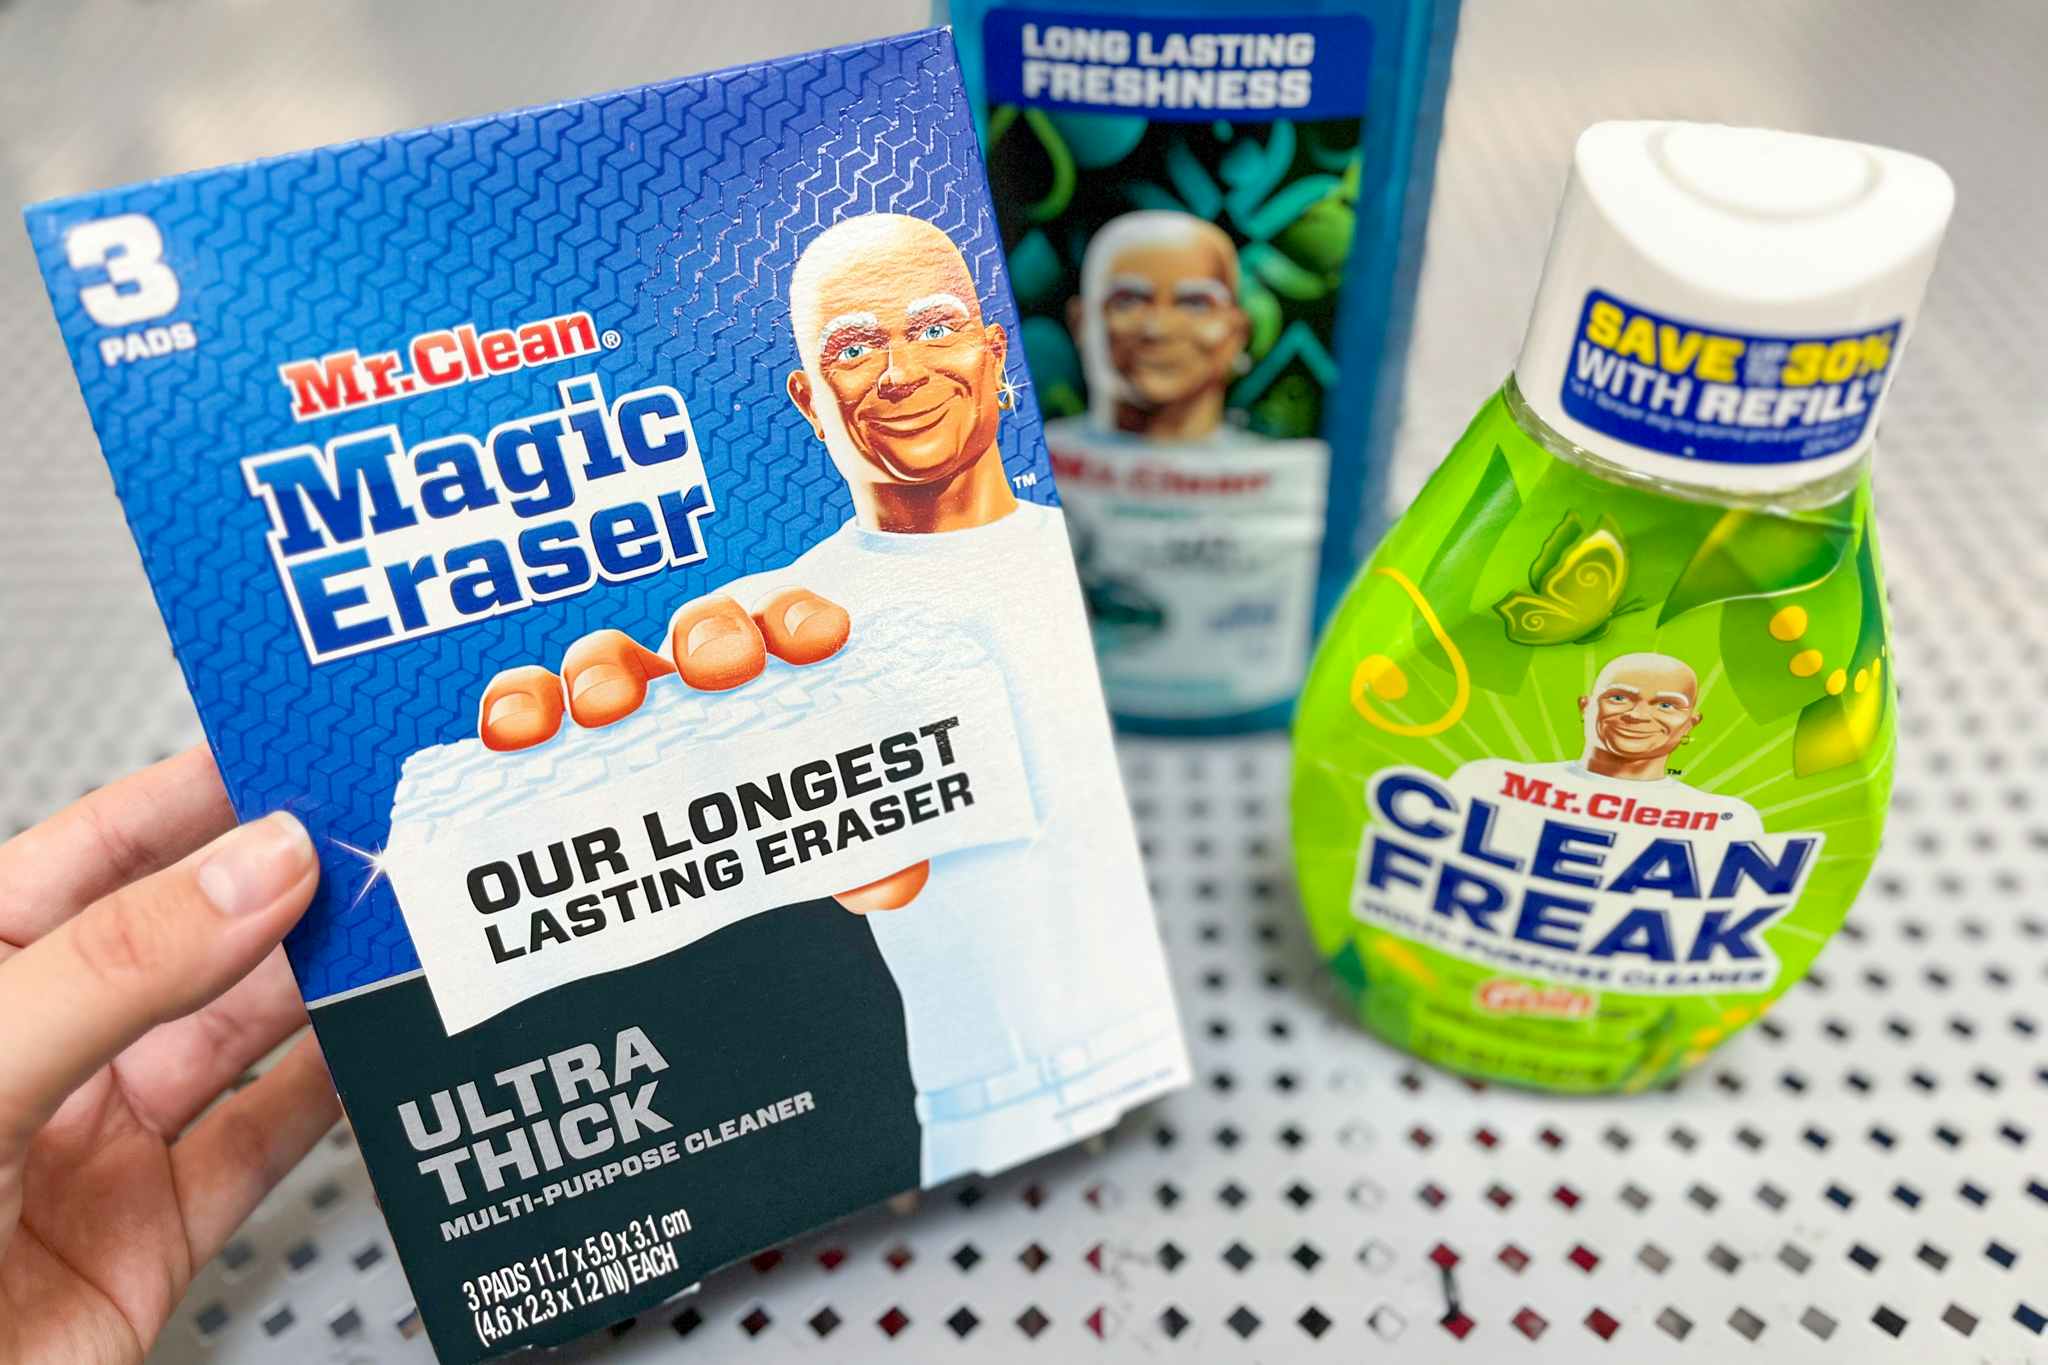 Get Mr. Clean Savings at Walmart: $2.94 Refills, $3.44 Erasers, and More